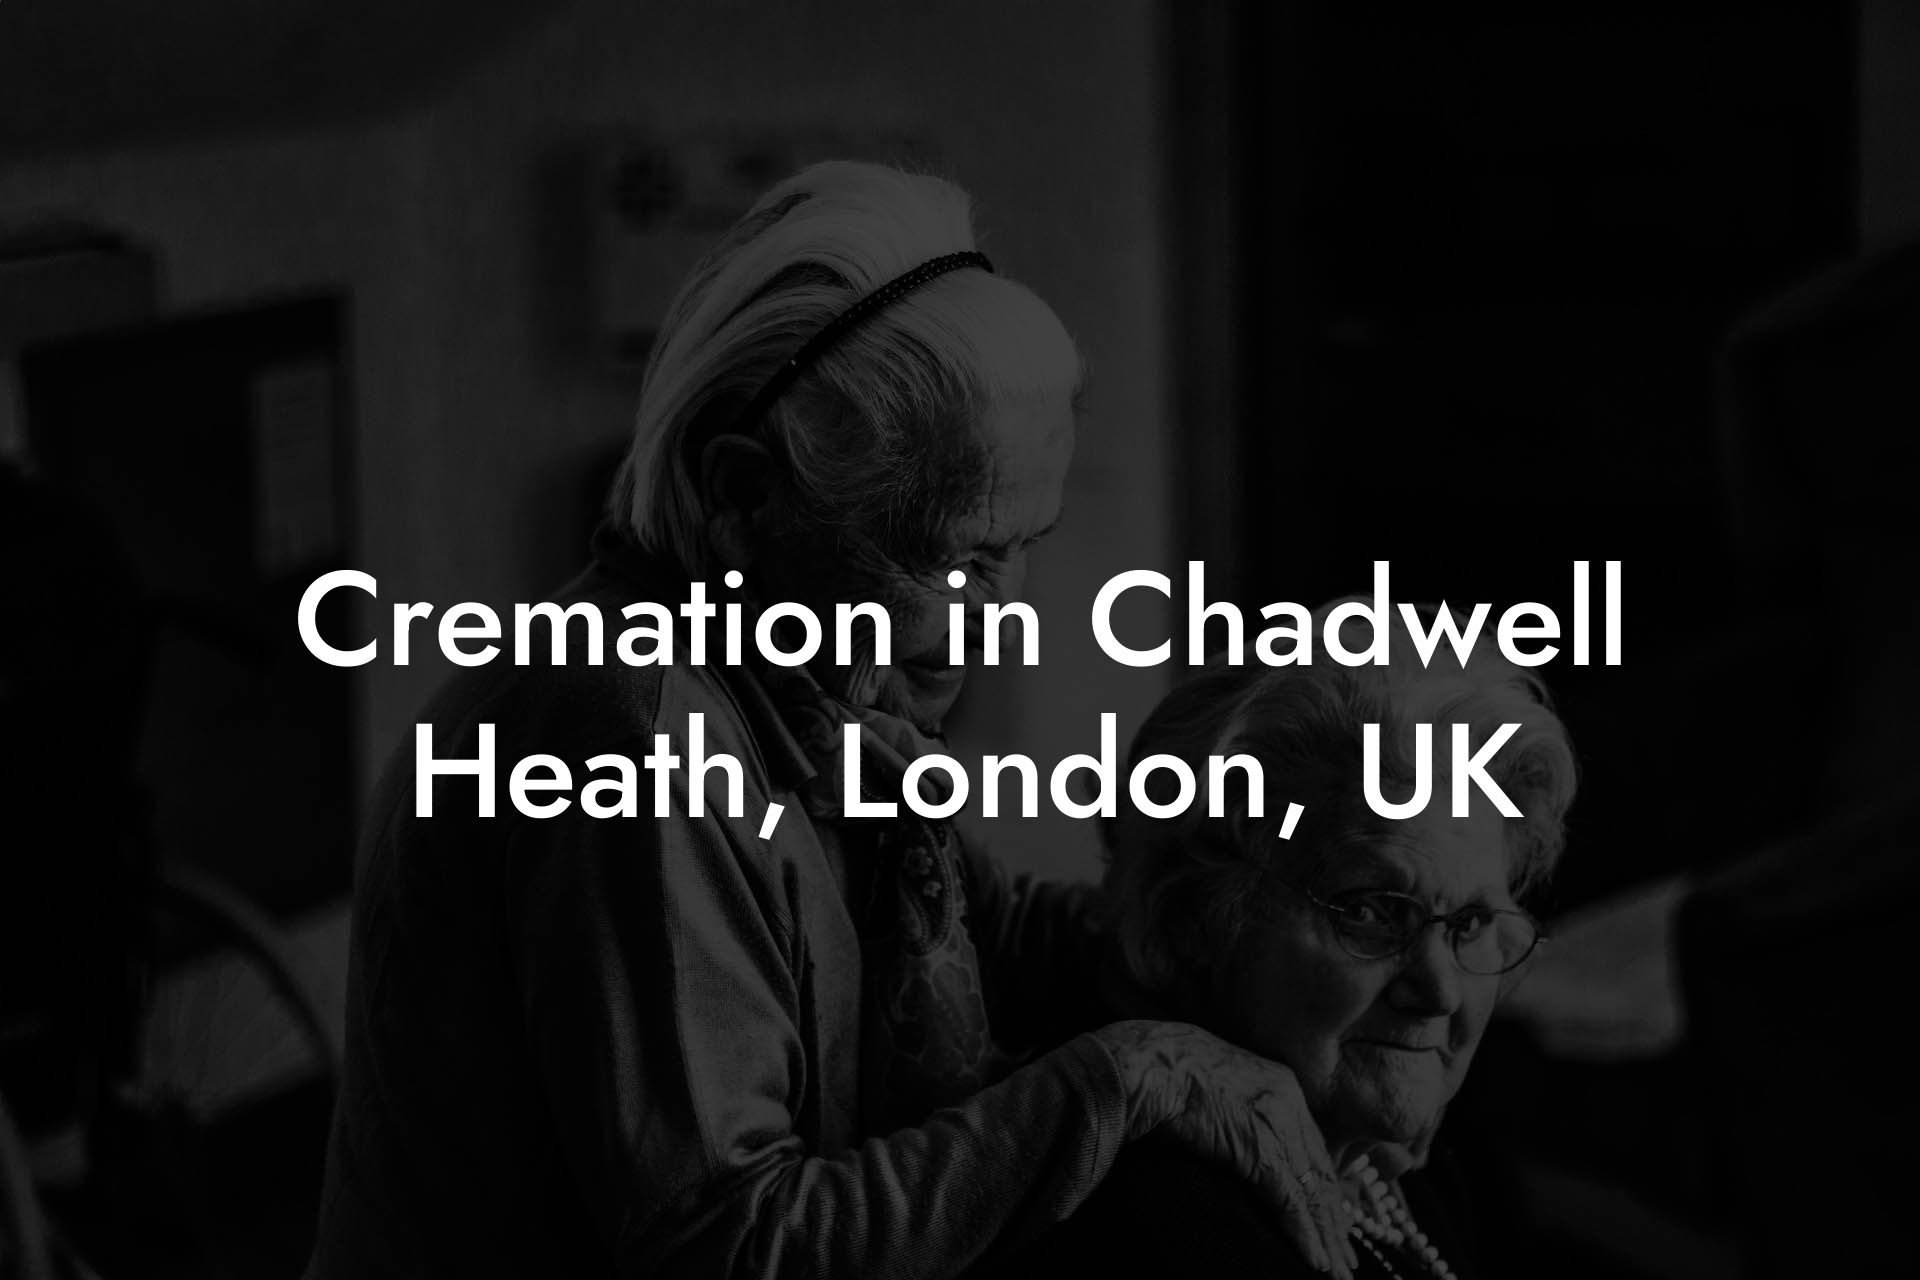 Cremation in Chadwell Heath, London, UK